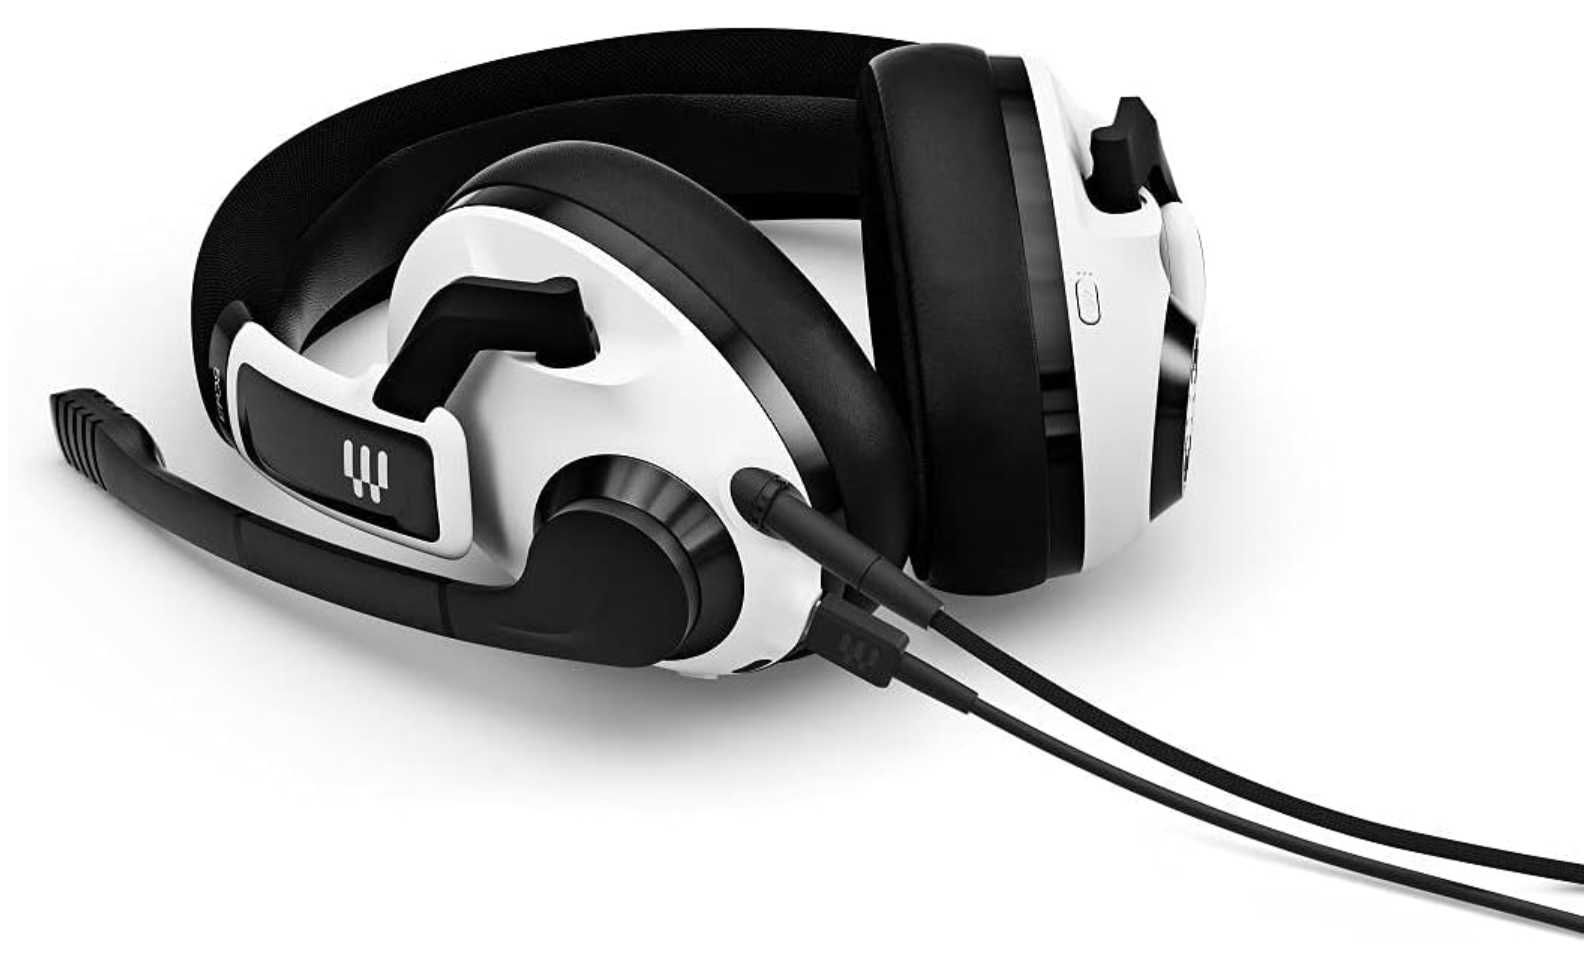 Sennheiser/EPOS - H3 Hybrid Gaming Headset - White